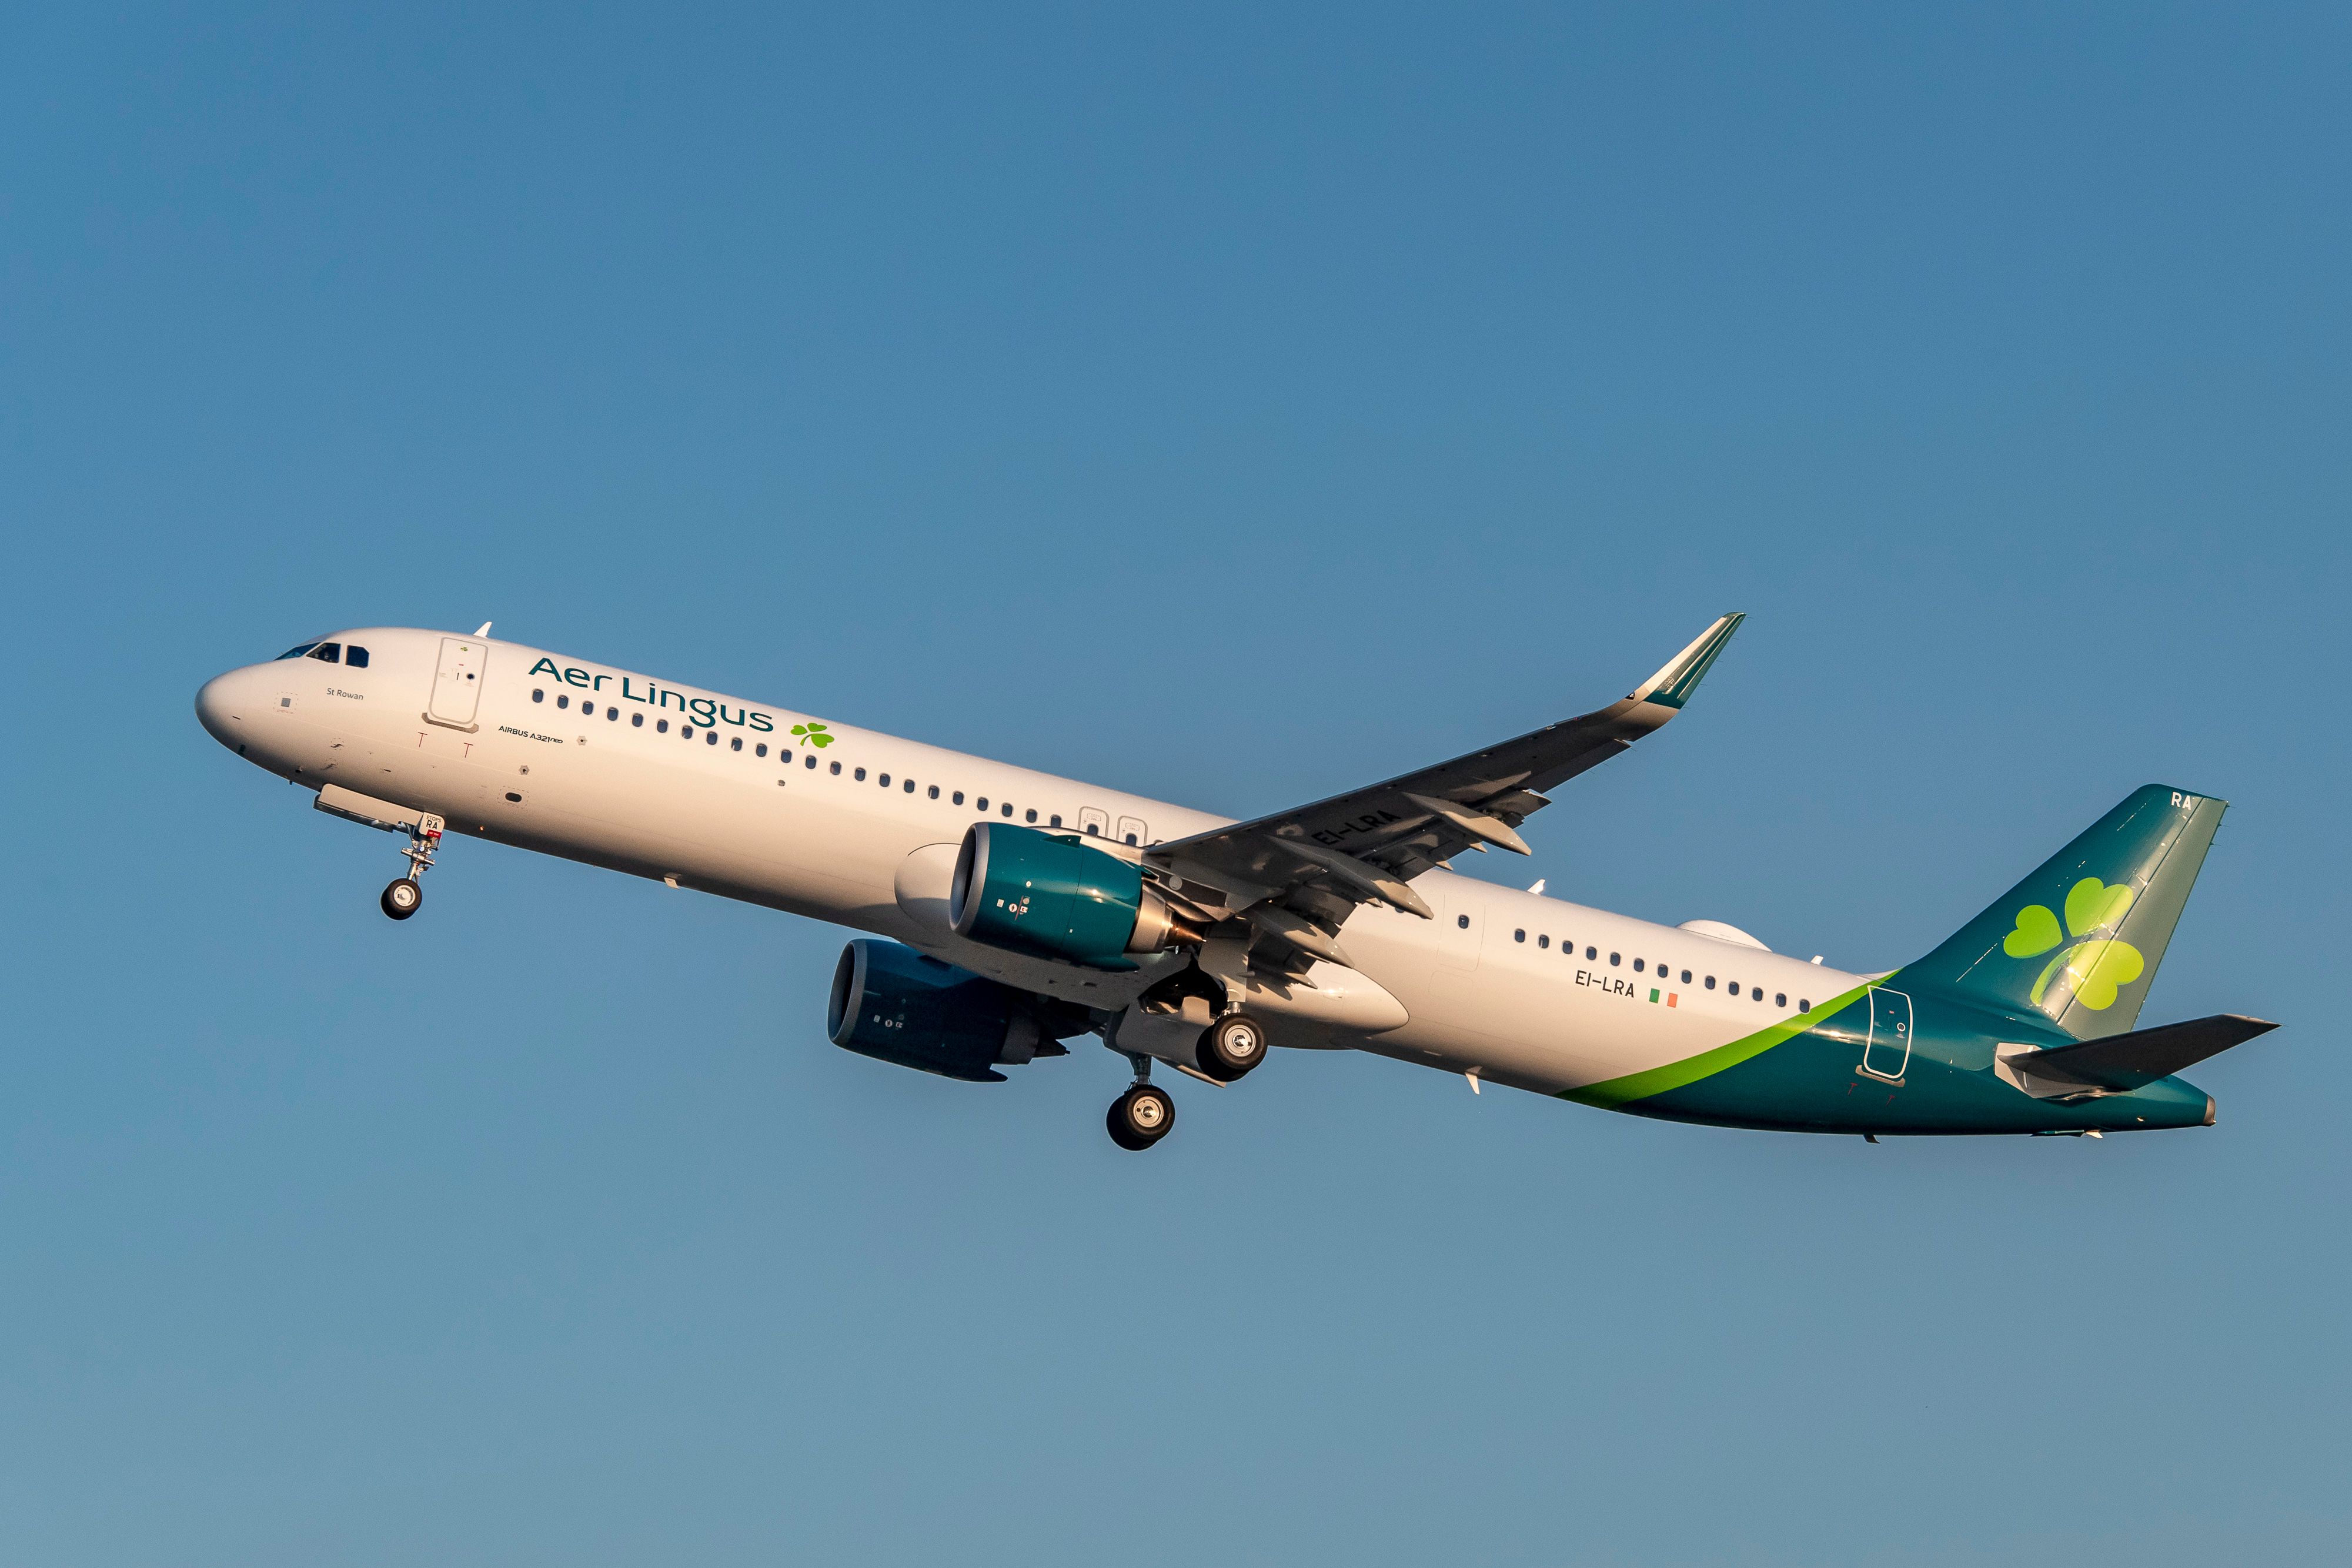 Aer Lingus Airbus A321neo